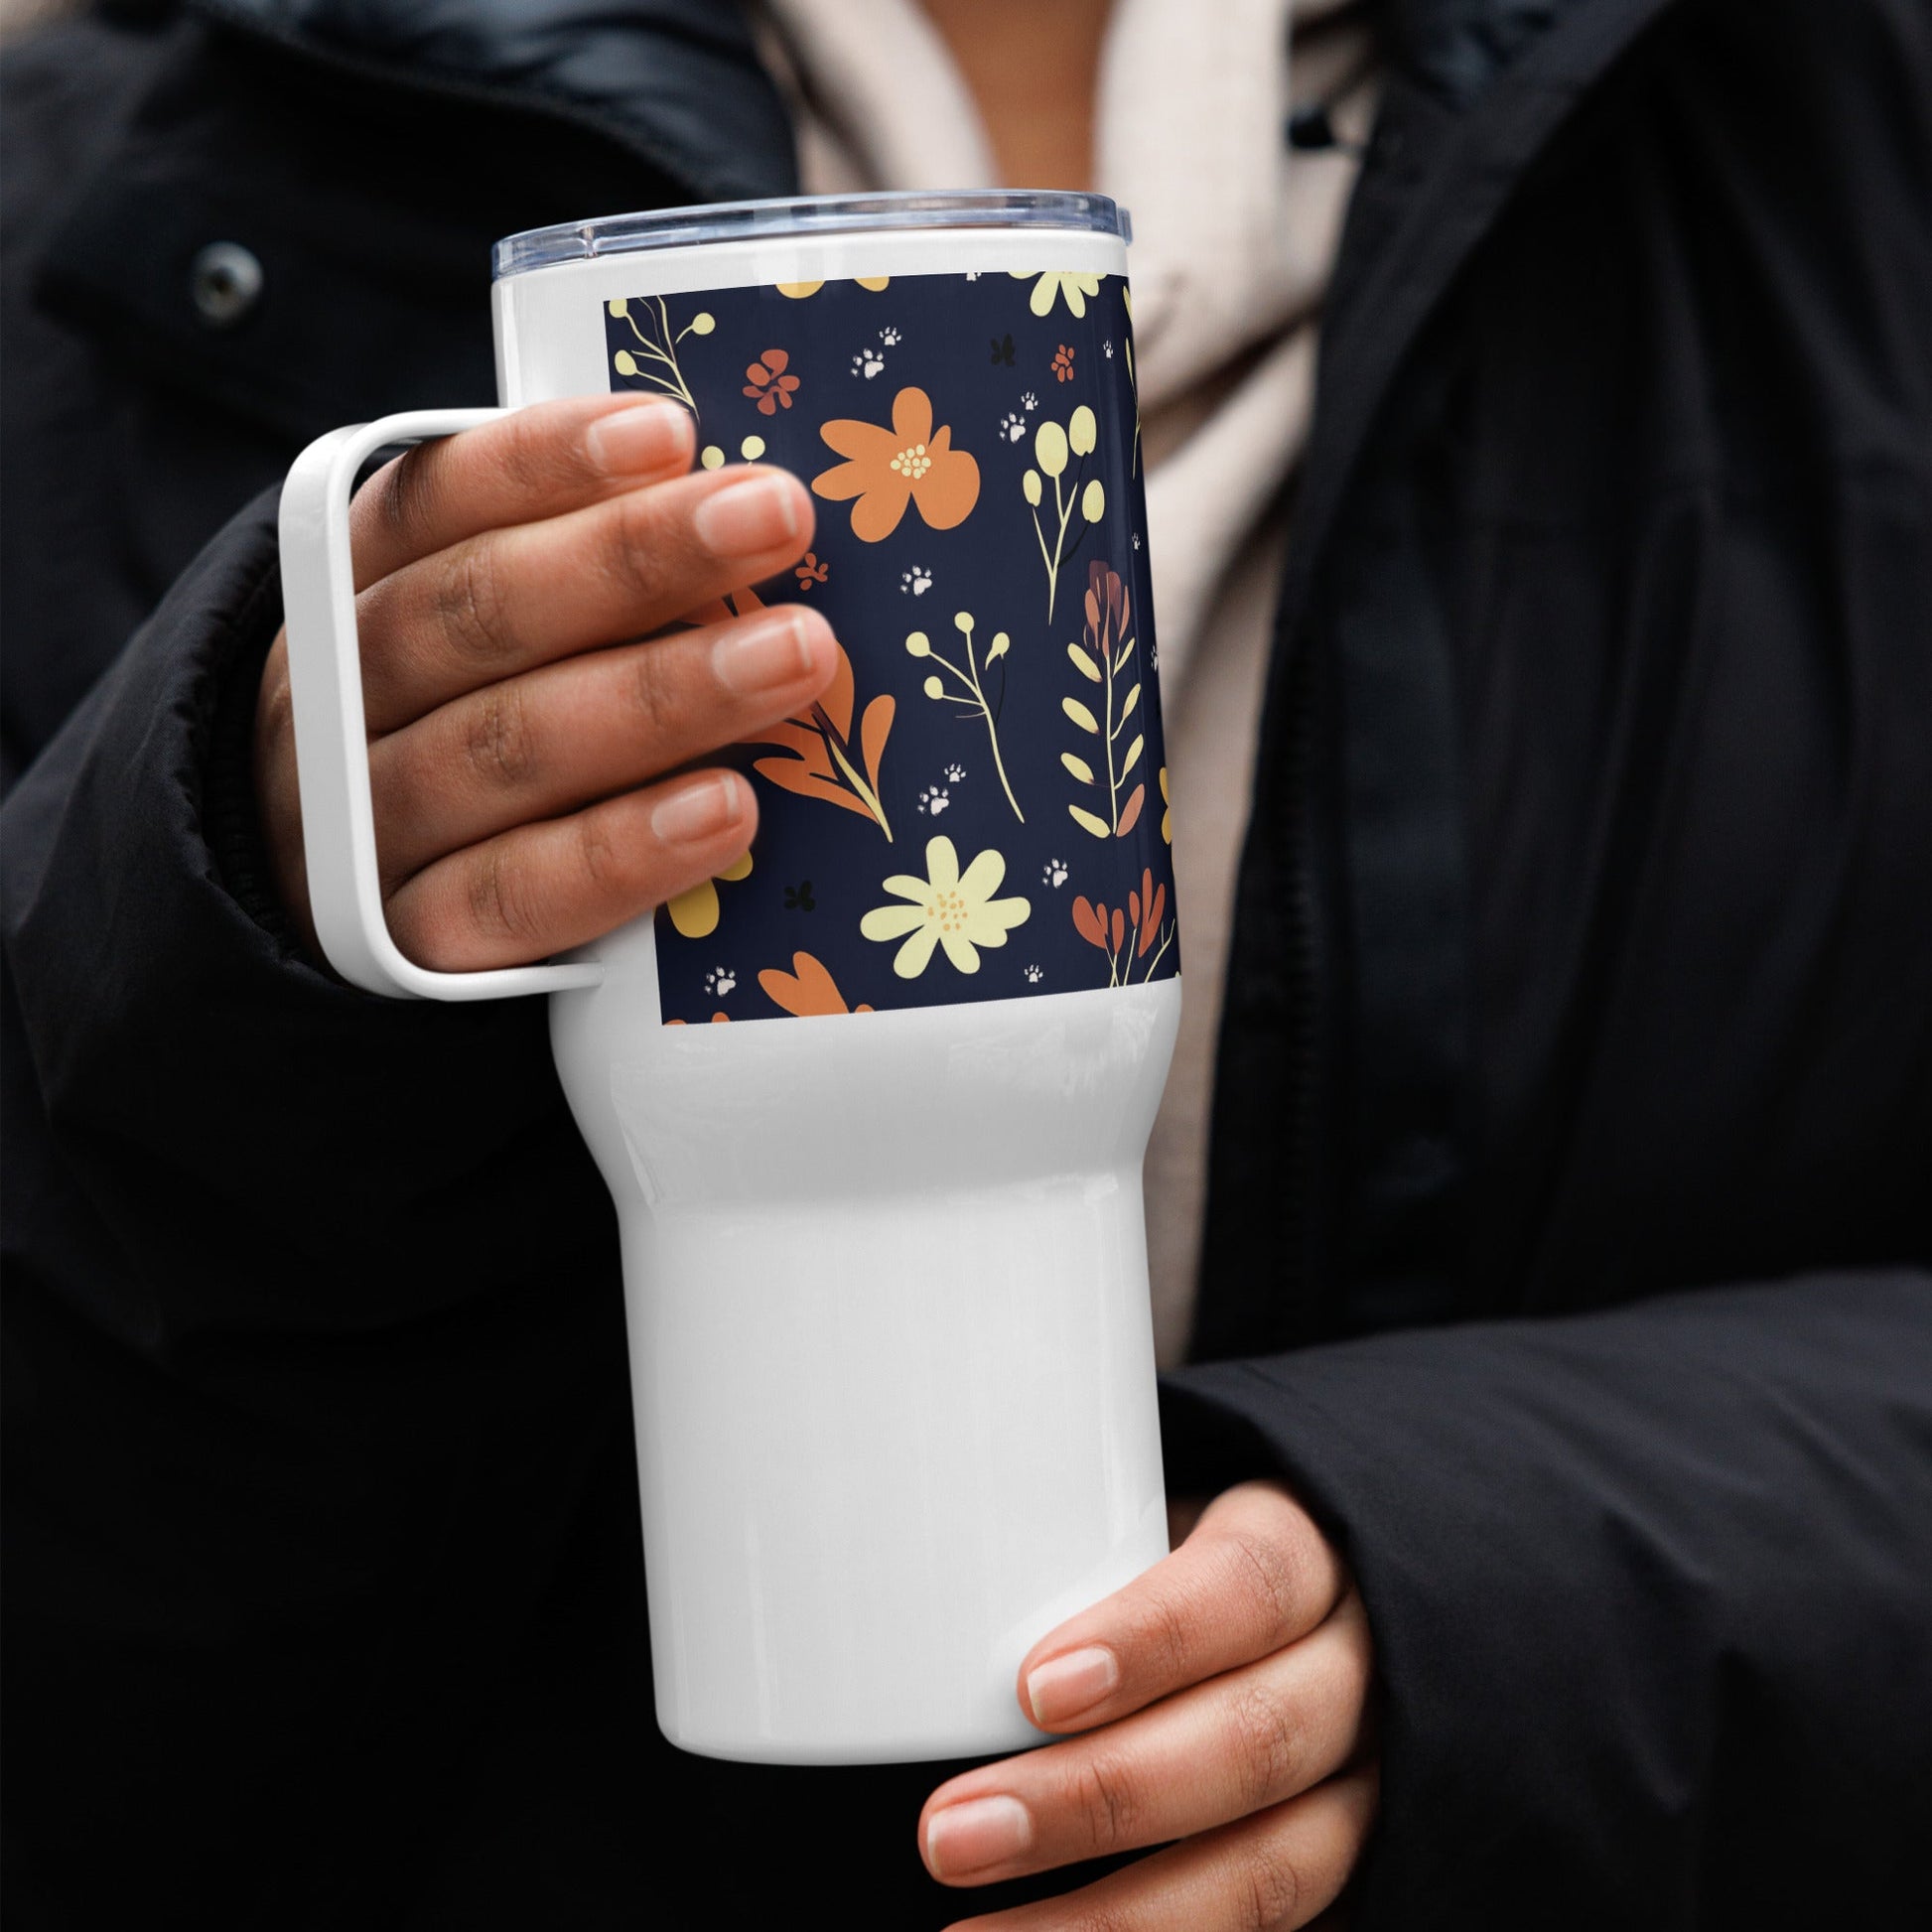 25oz Travel Mug with a Handle - Boho Flower and Paw Print Design [Blue] - Hobbster